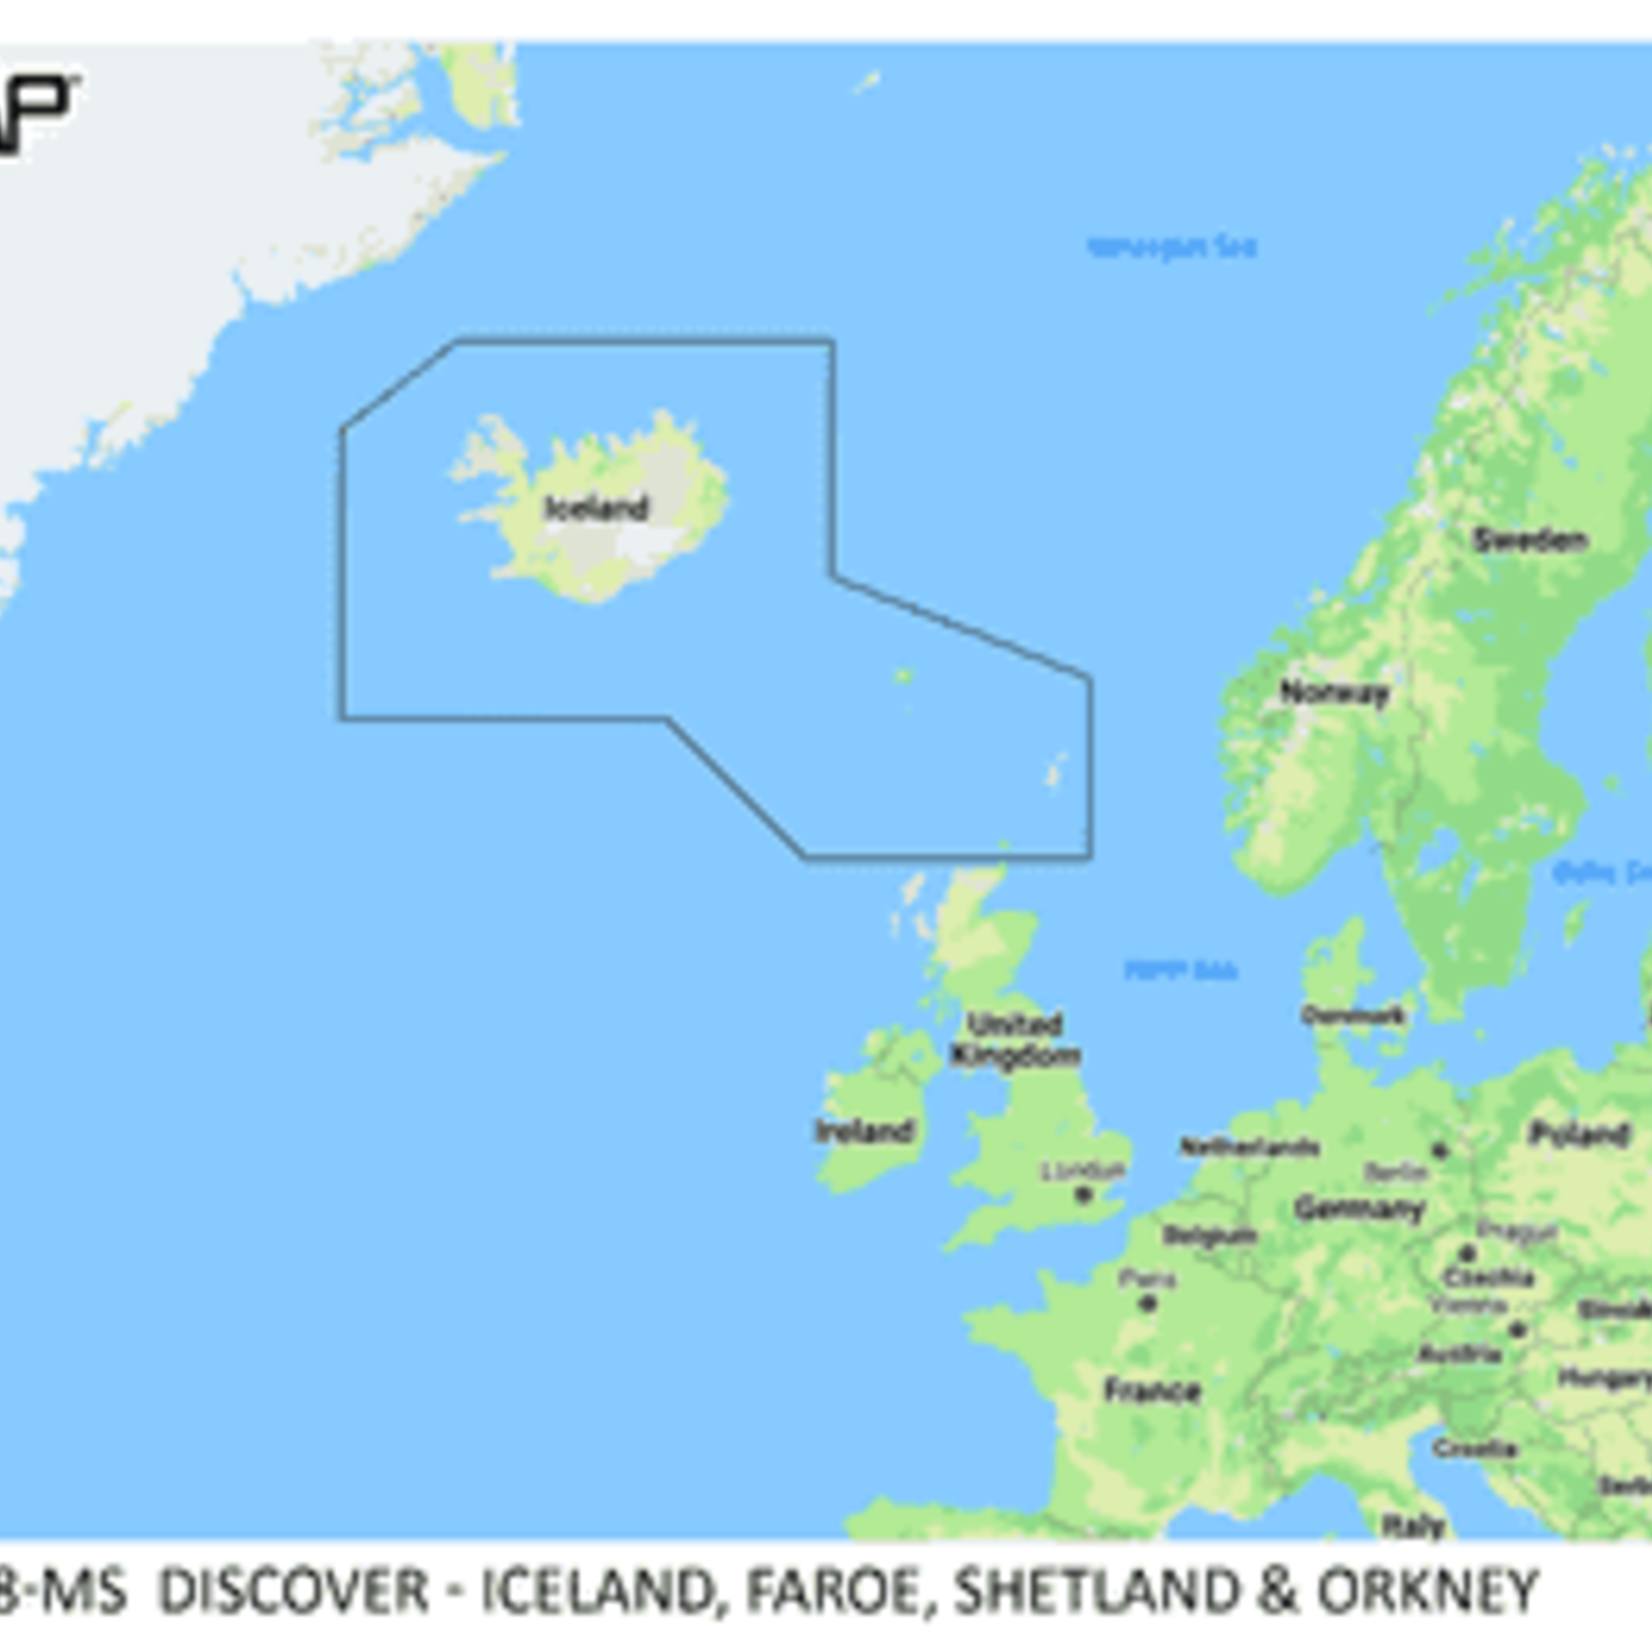 C-MAP DISCOVER - Iceland, Faroe, Shetland & Orkney Islands